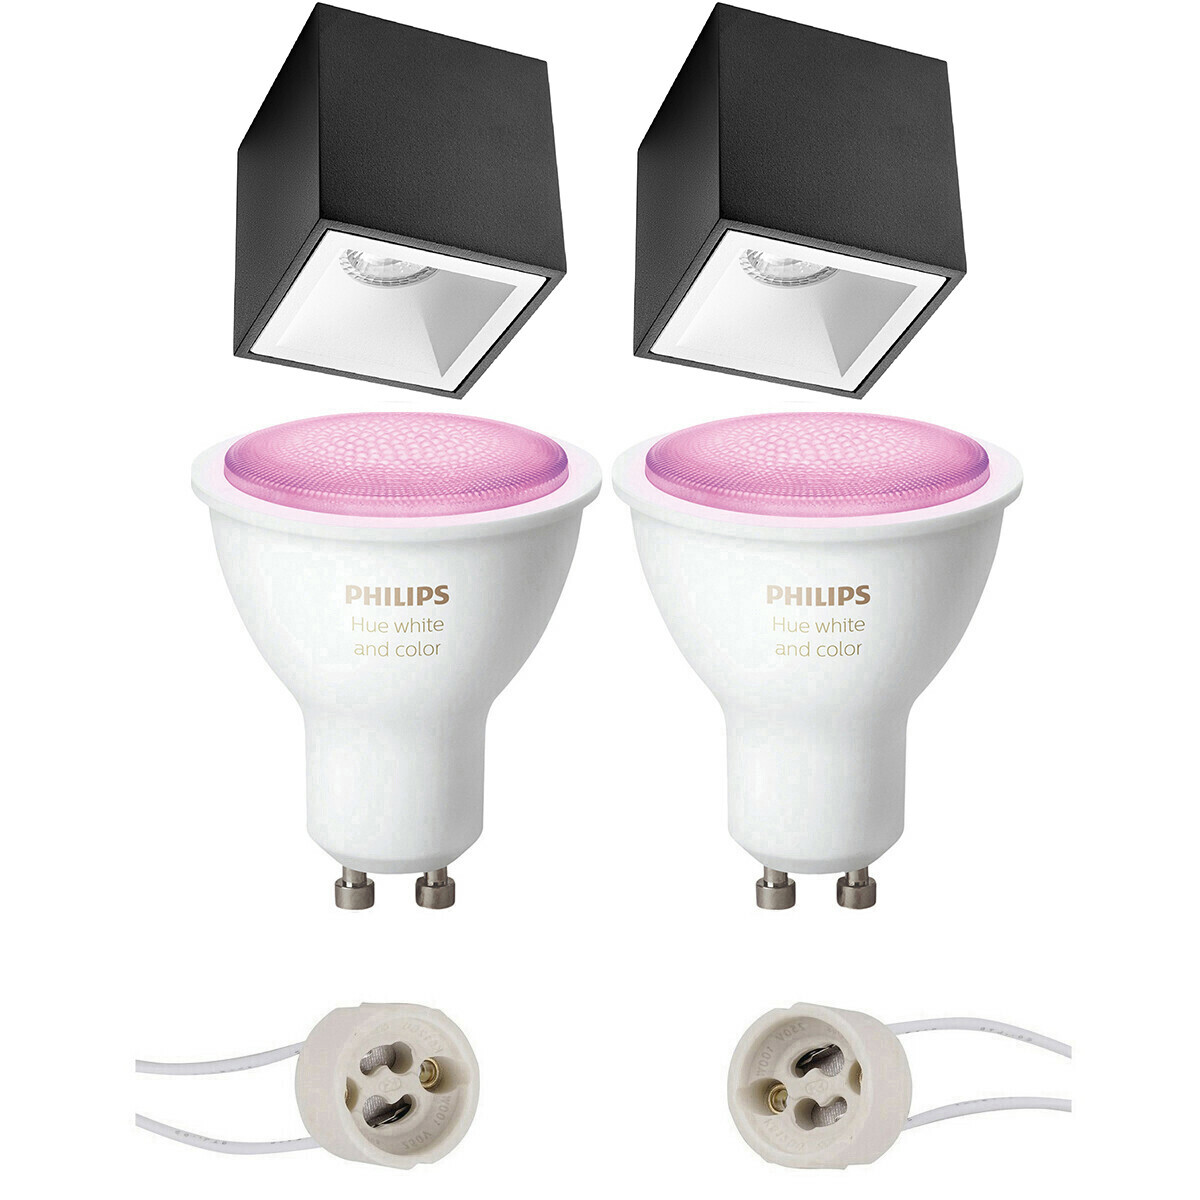 BES LED Pragmi Cliron Pro - Opbouw Vierkant - Mat Zwart/Wit - Verdiept - 90mm - Philips Hue - Opbouwspot Set GU10 - White and Color Ambiance - Bluetooth